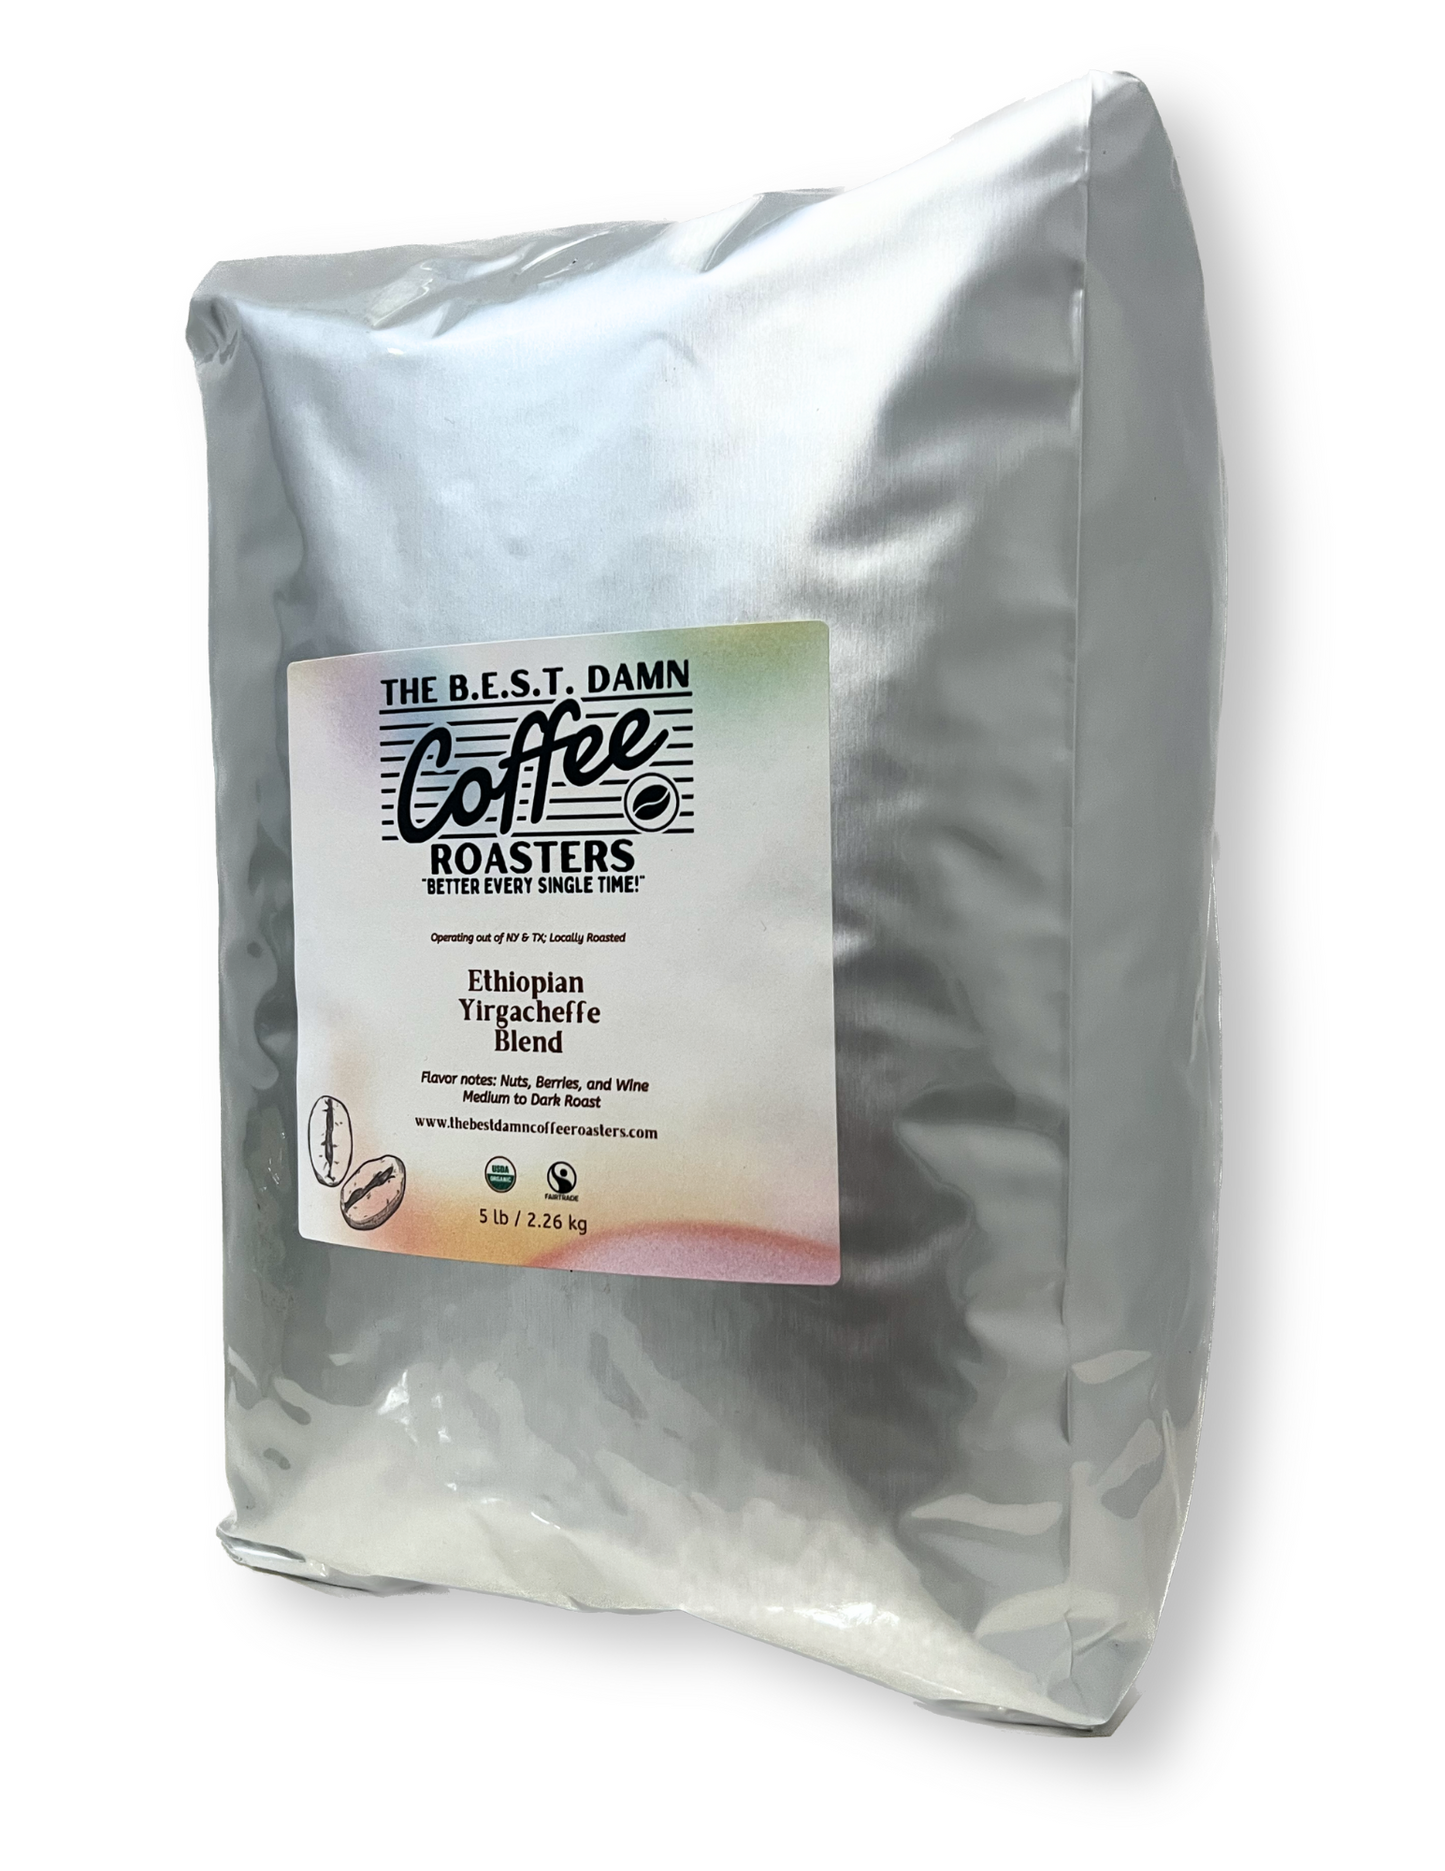 The Best Damn Coffee - Ethiopian Yirgacheffe Blend - 5 Pounds